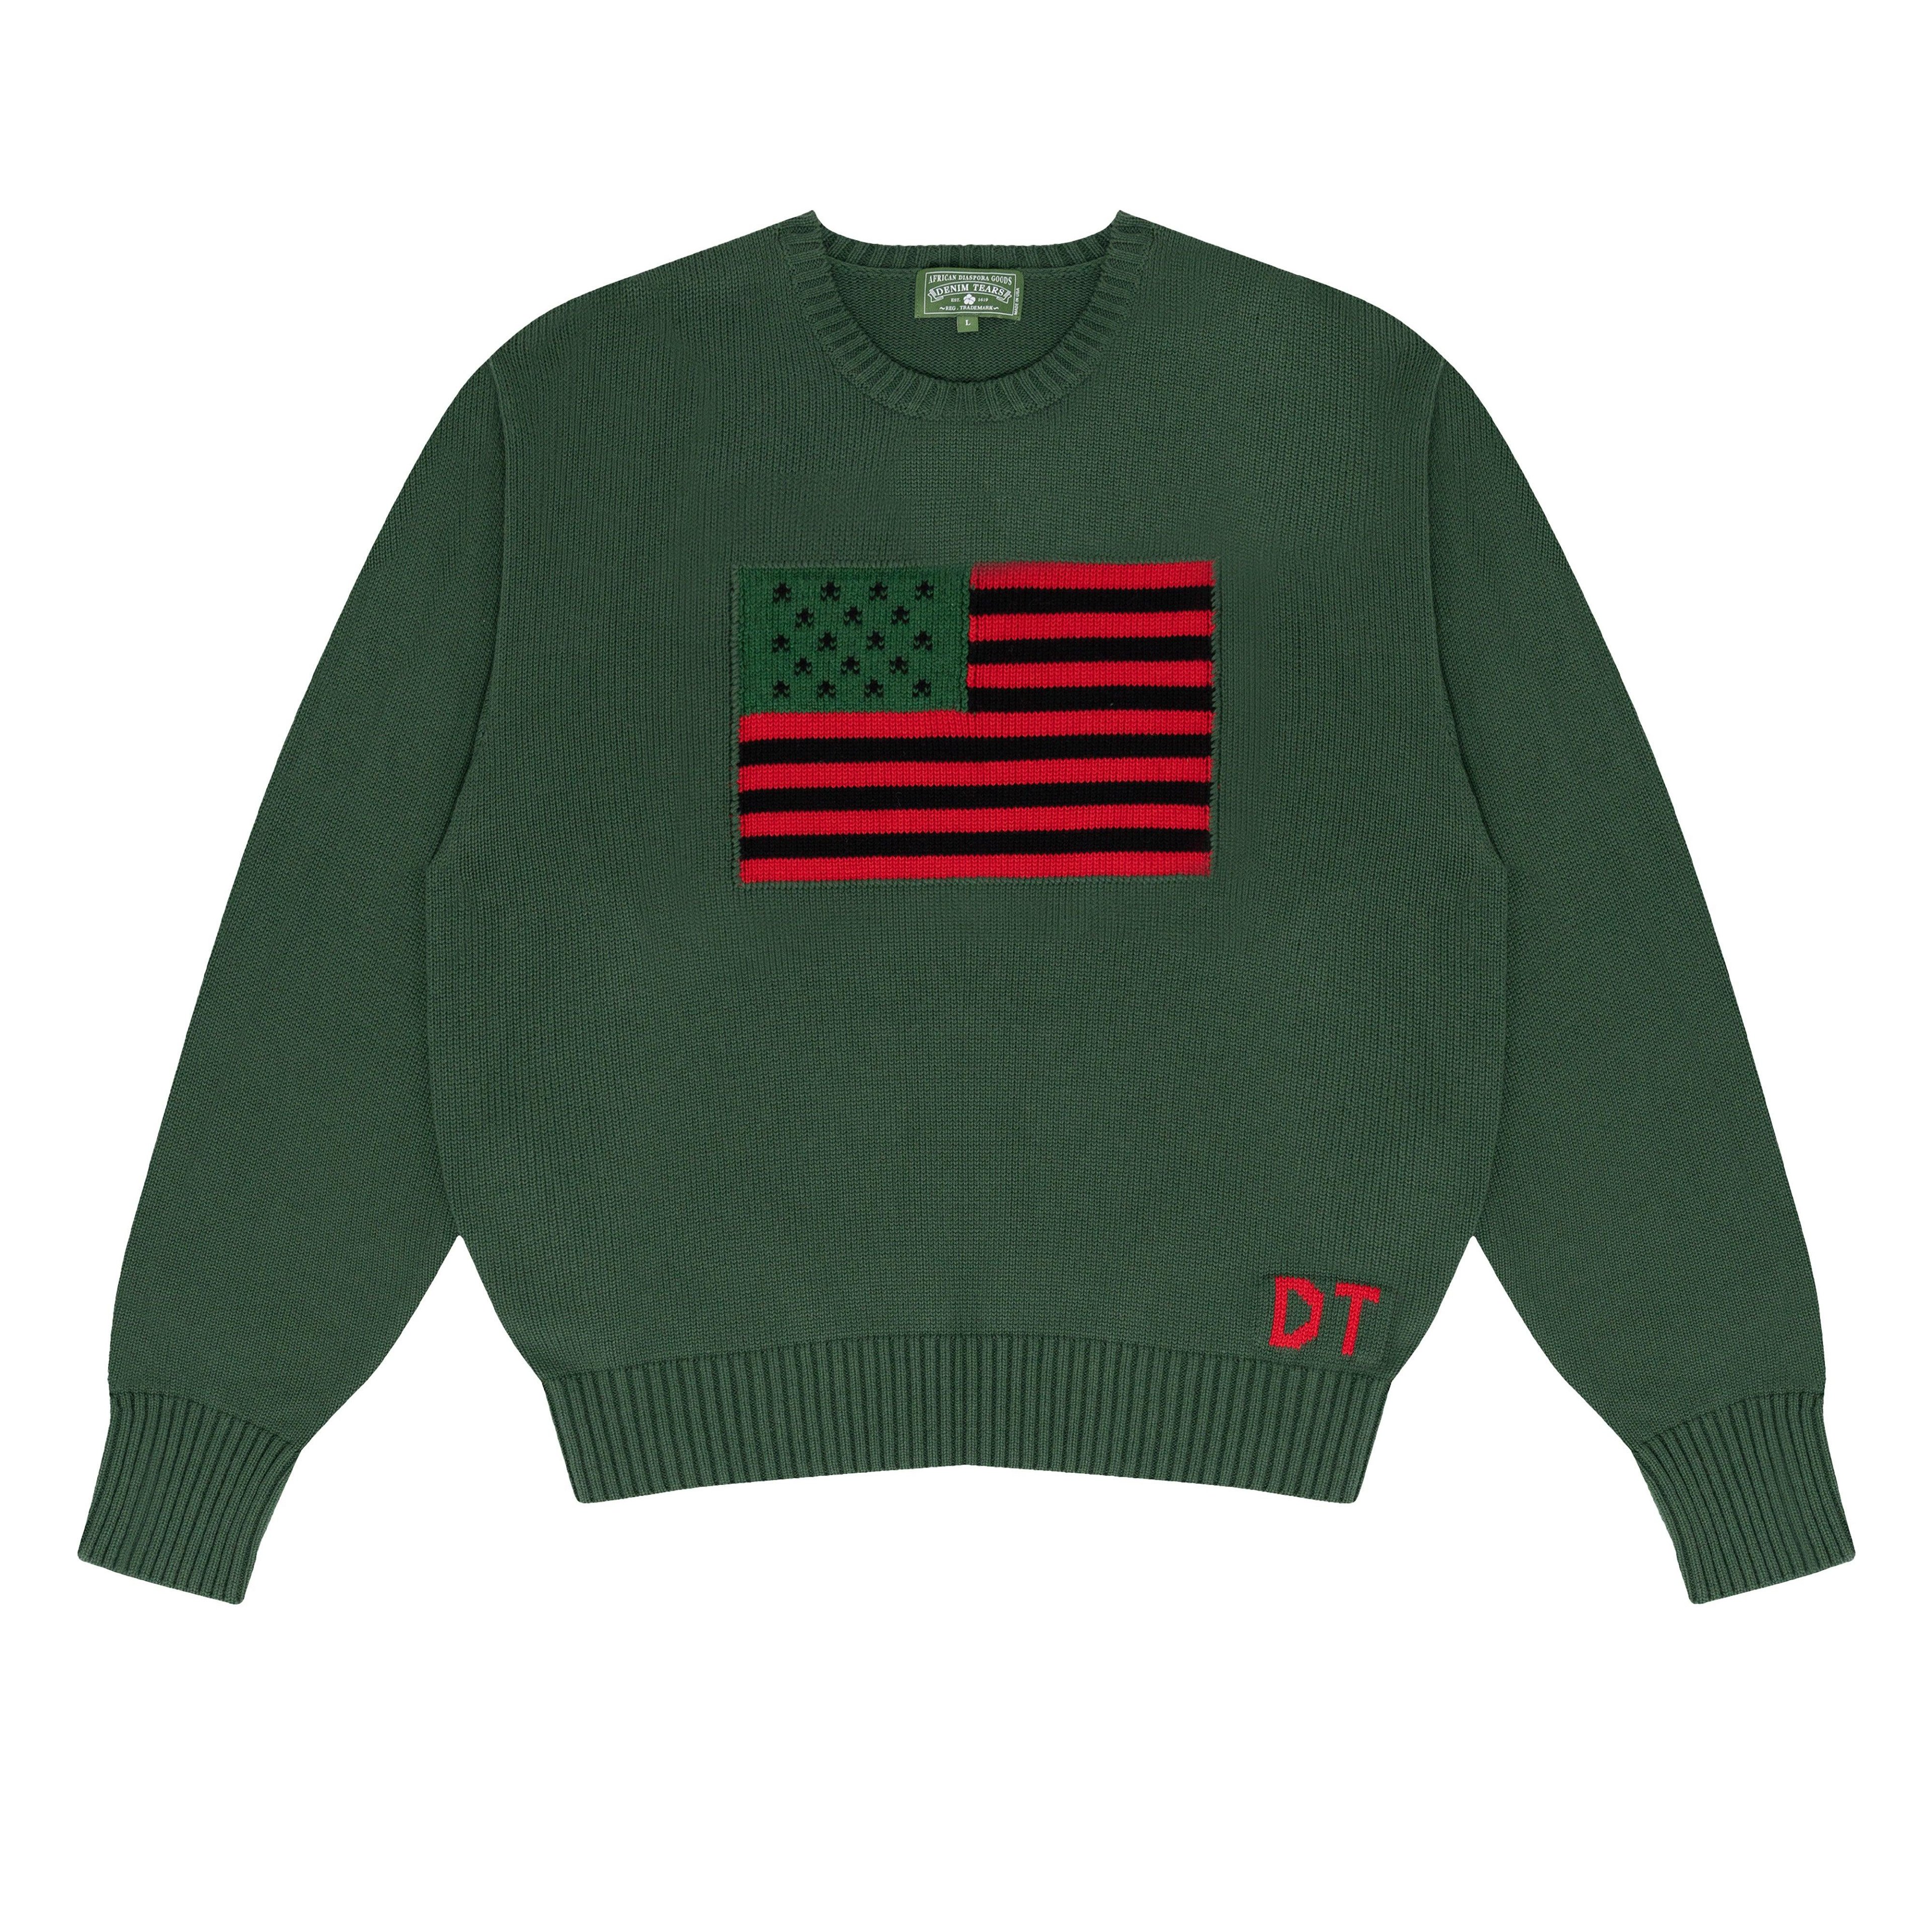 Denim Tears - 1619 Pan African Flag Sweater - (Green) by DENIM TEARS